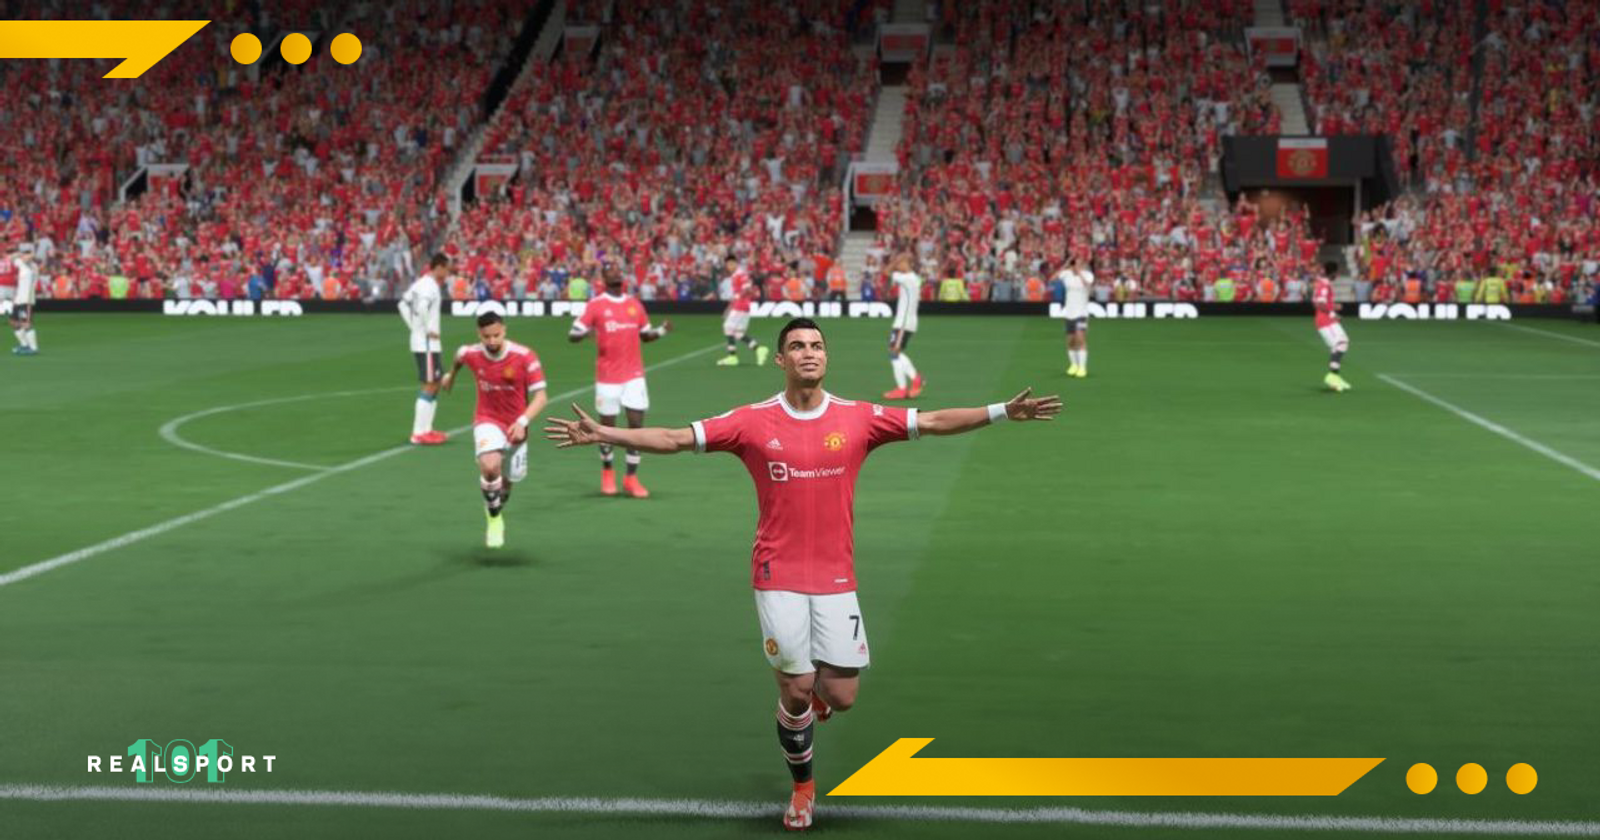 THE ULTIMATE FIFA 22 WEB APP STARTER GUIDE! 